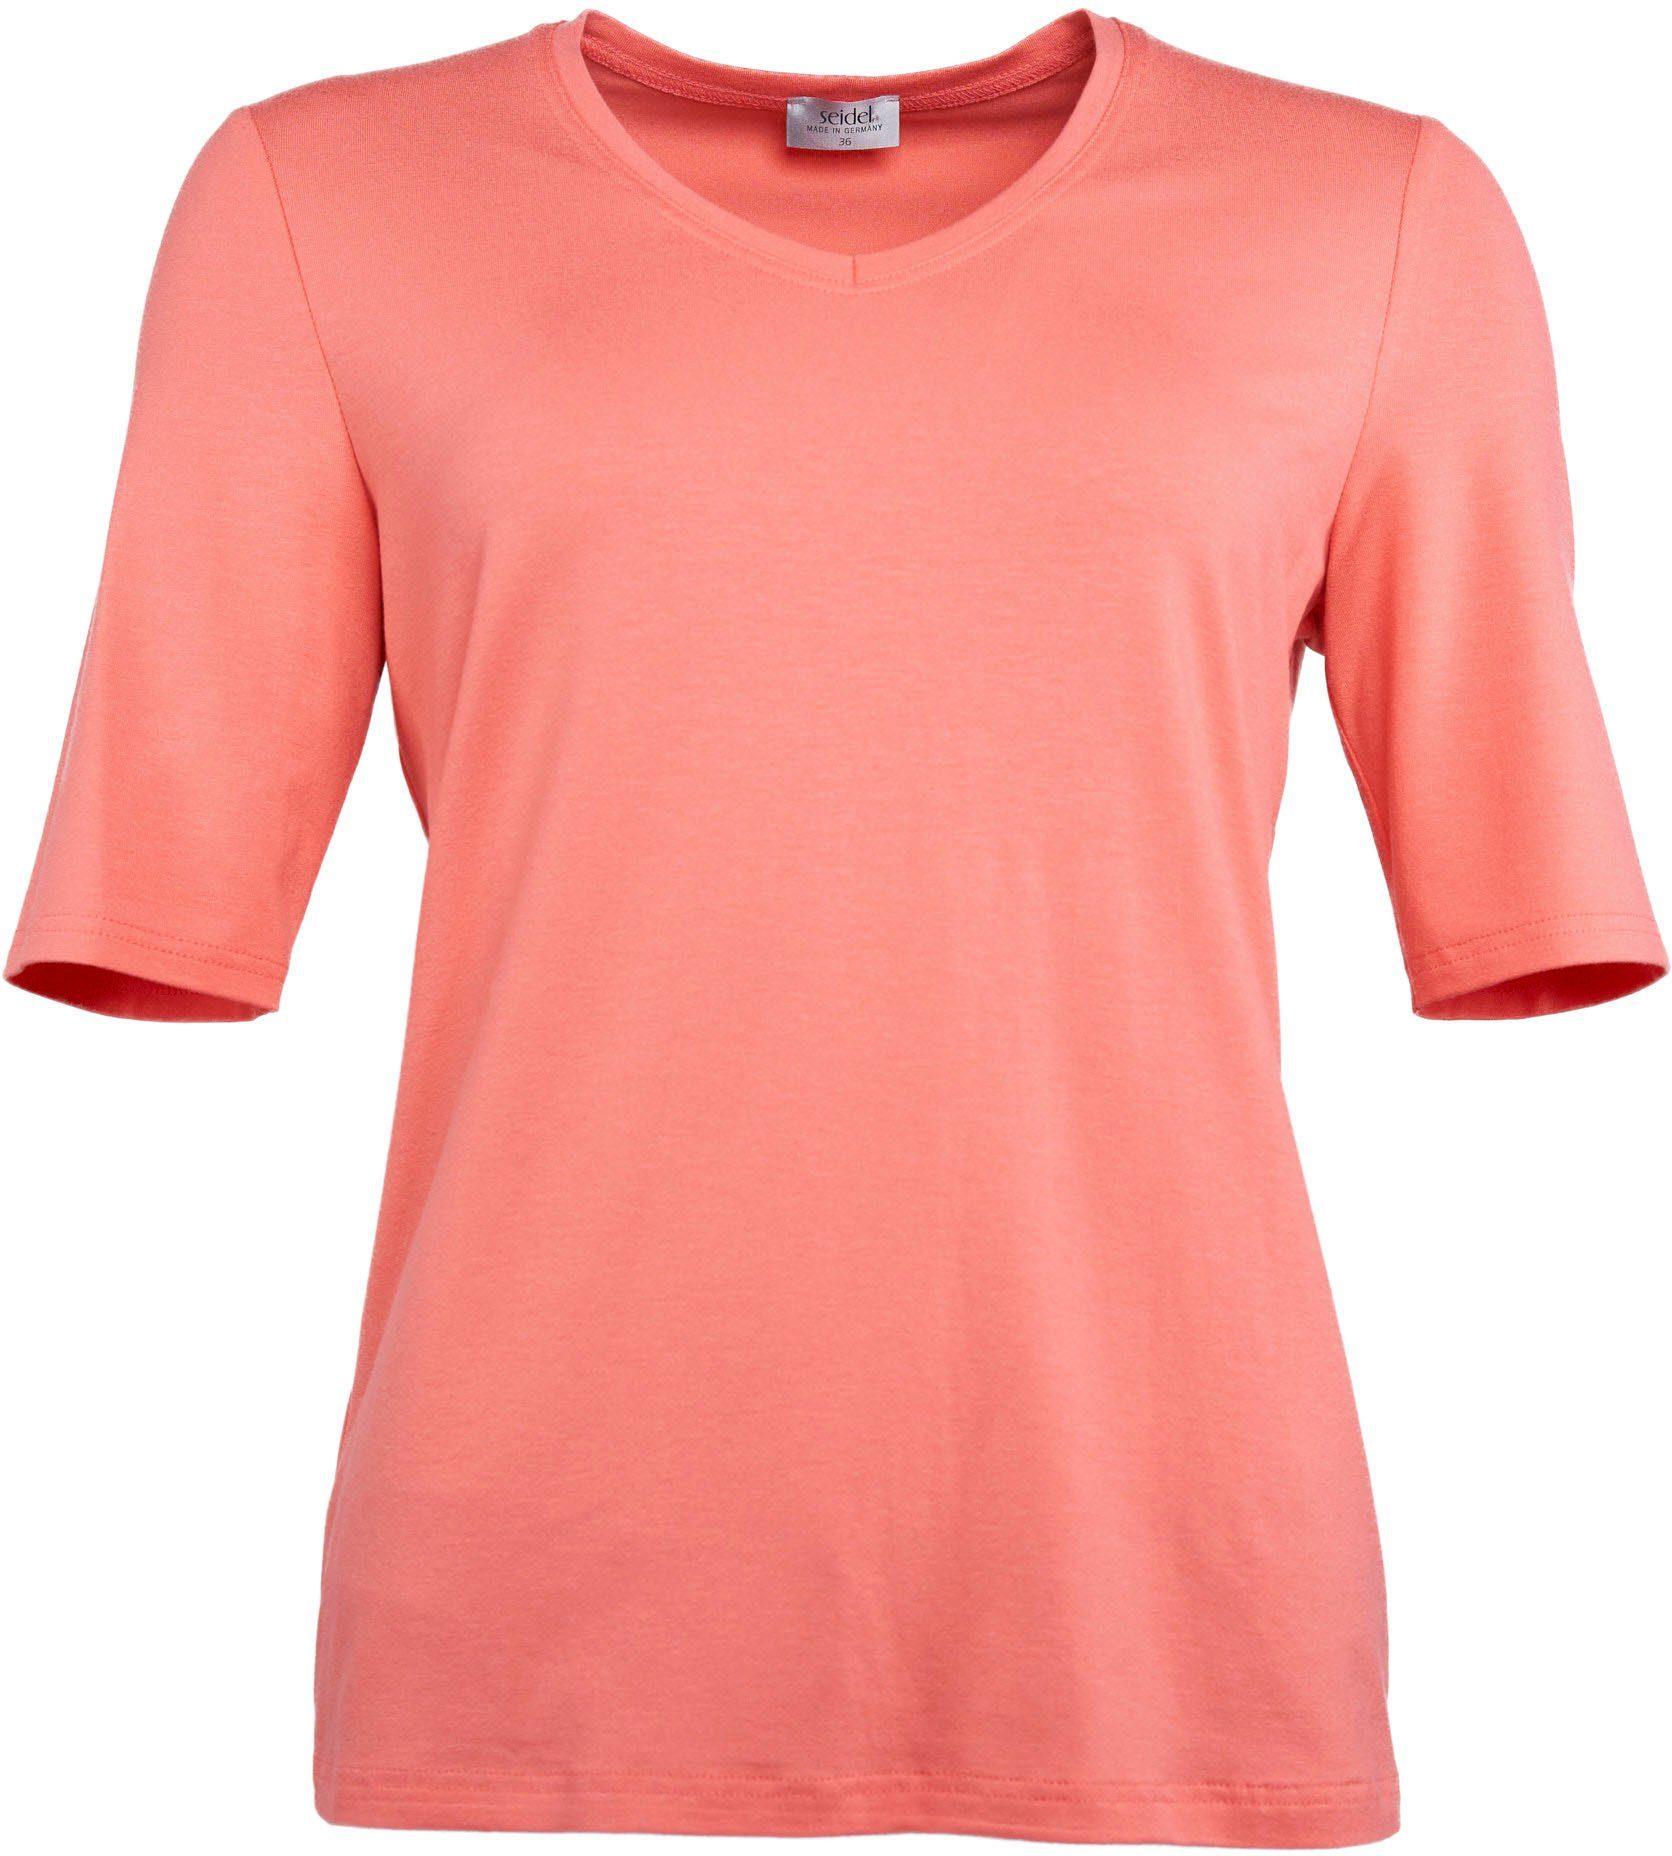 Halbarm apricot V-Shirt Moden softem IN mit MADE Material, Seidel aus GERMANY